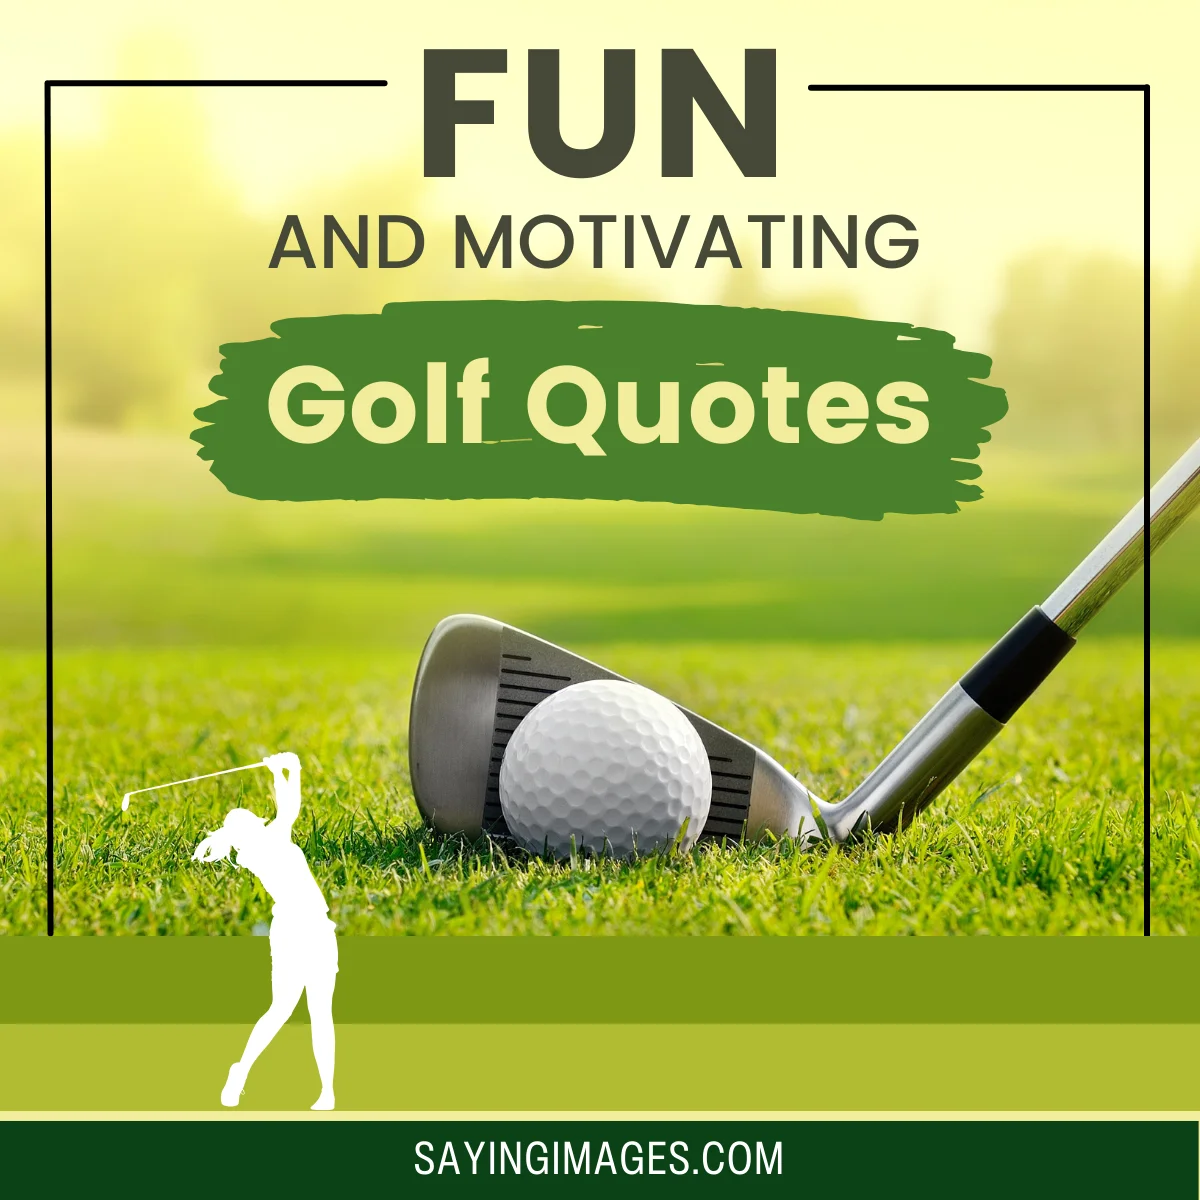 Golf quotes